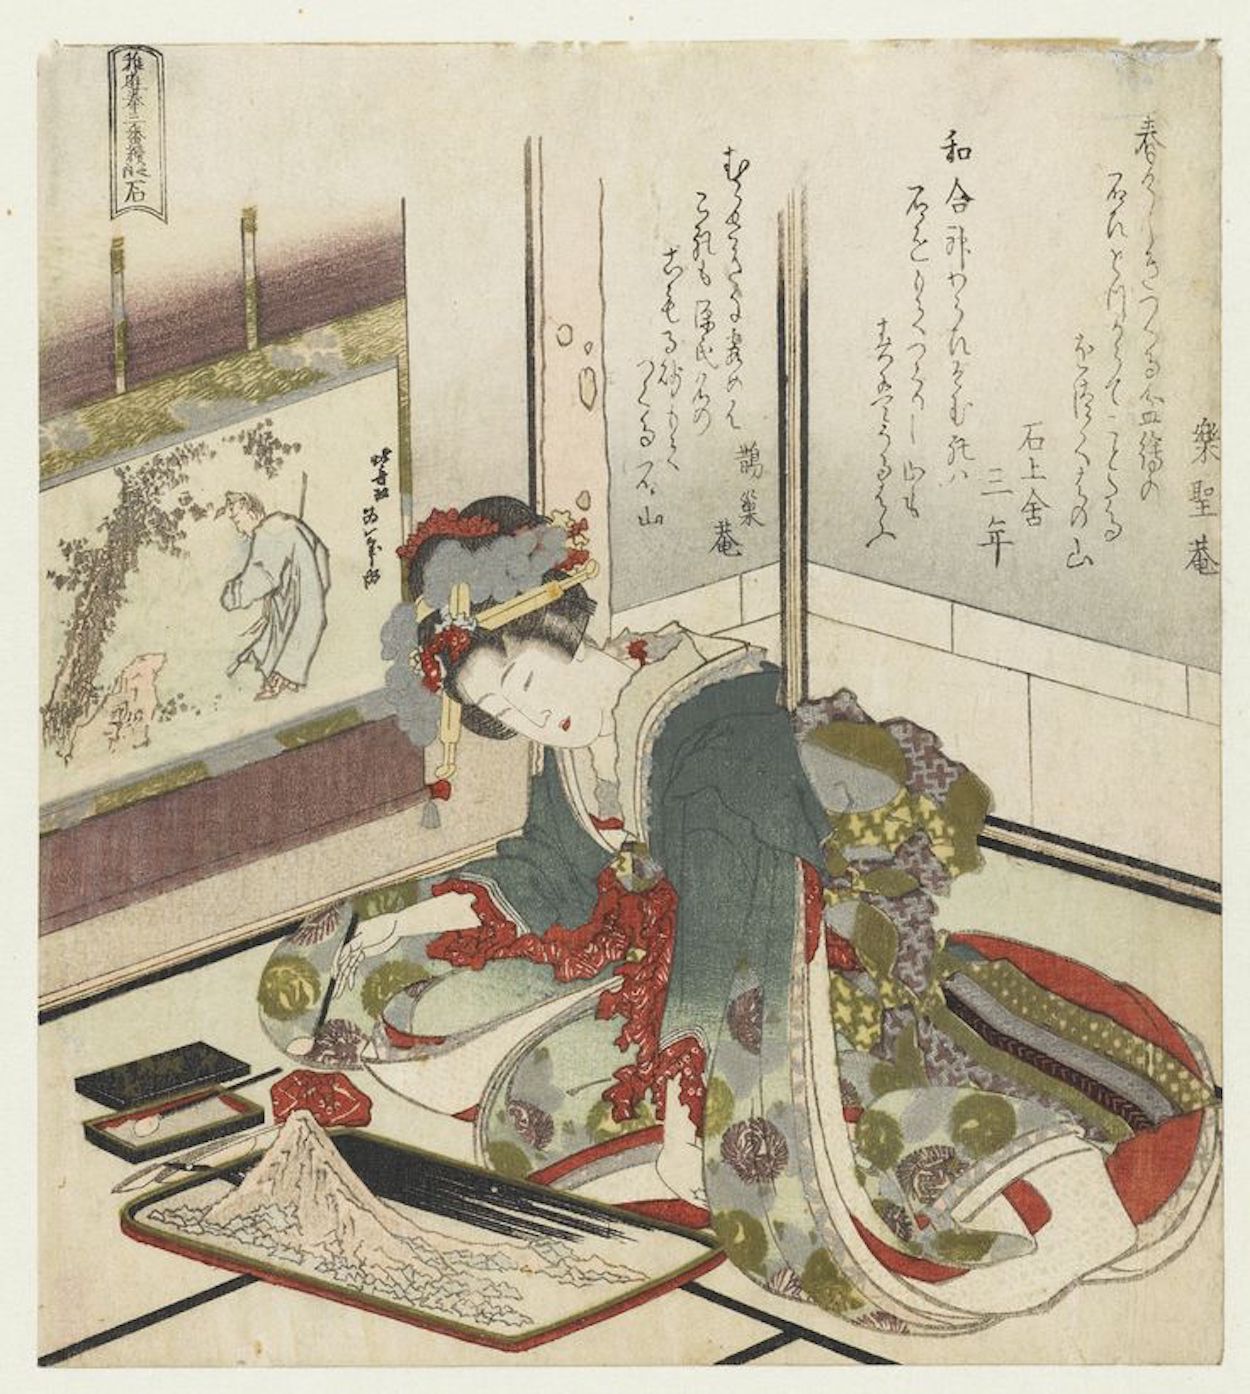 Taş by Katsushika Hokusai - 1823 özel koleksiyon